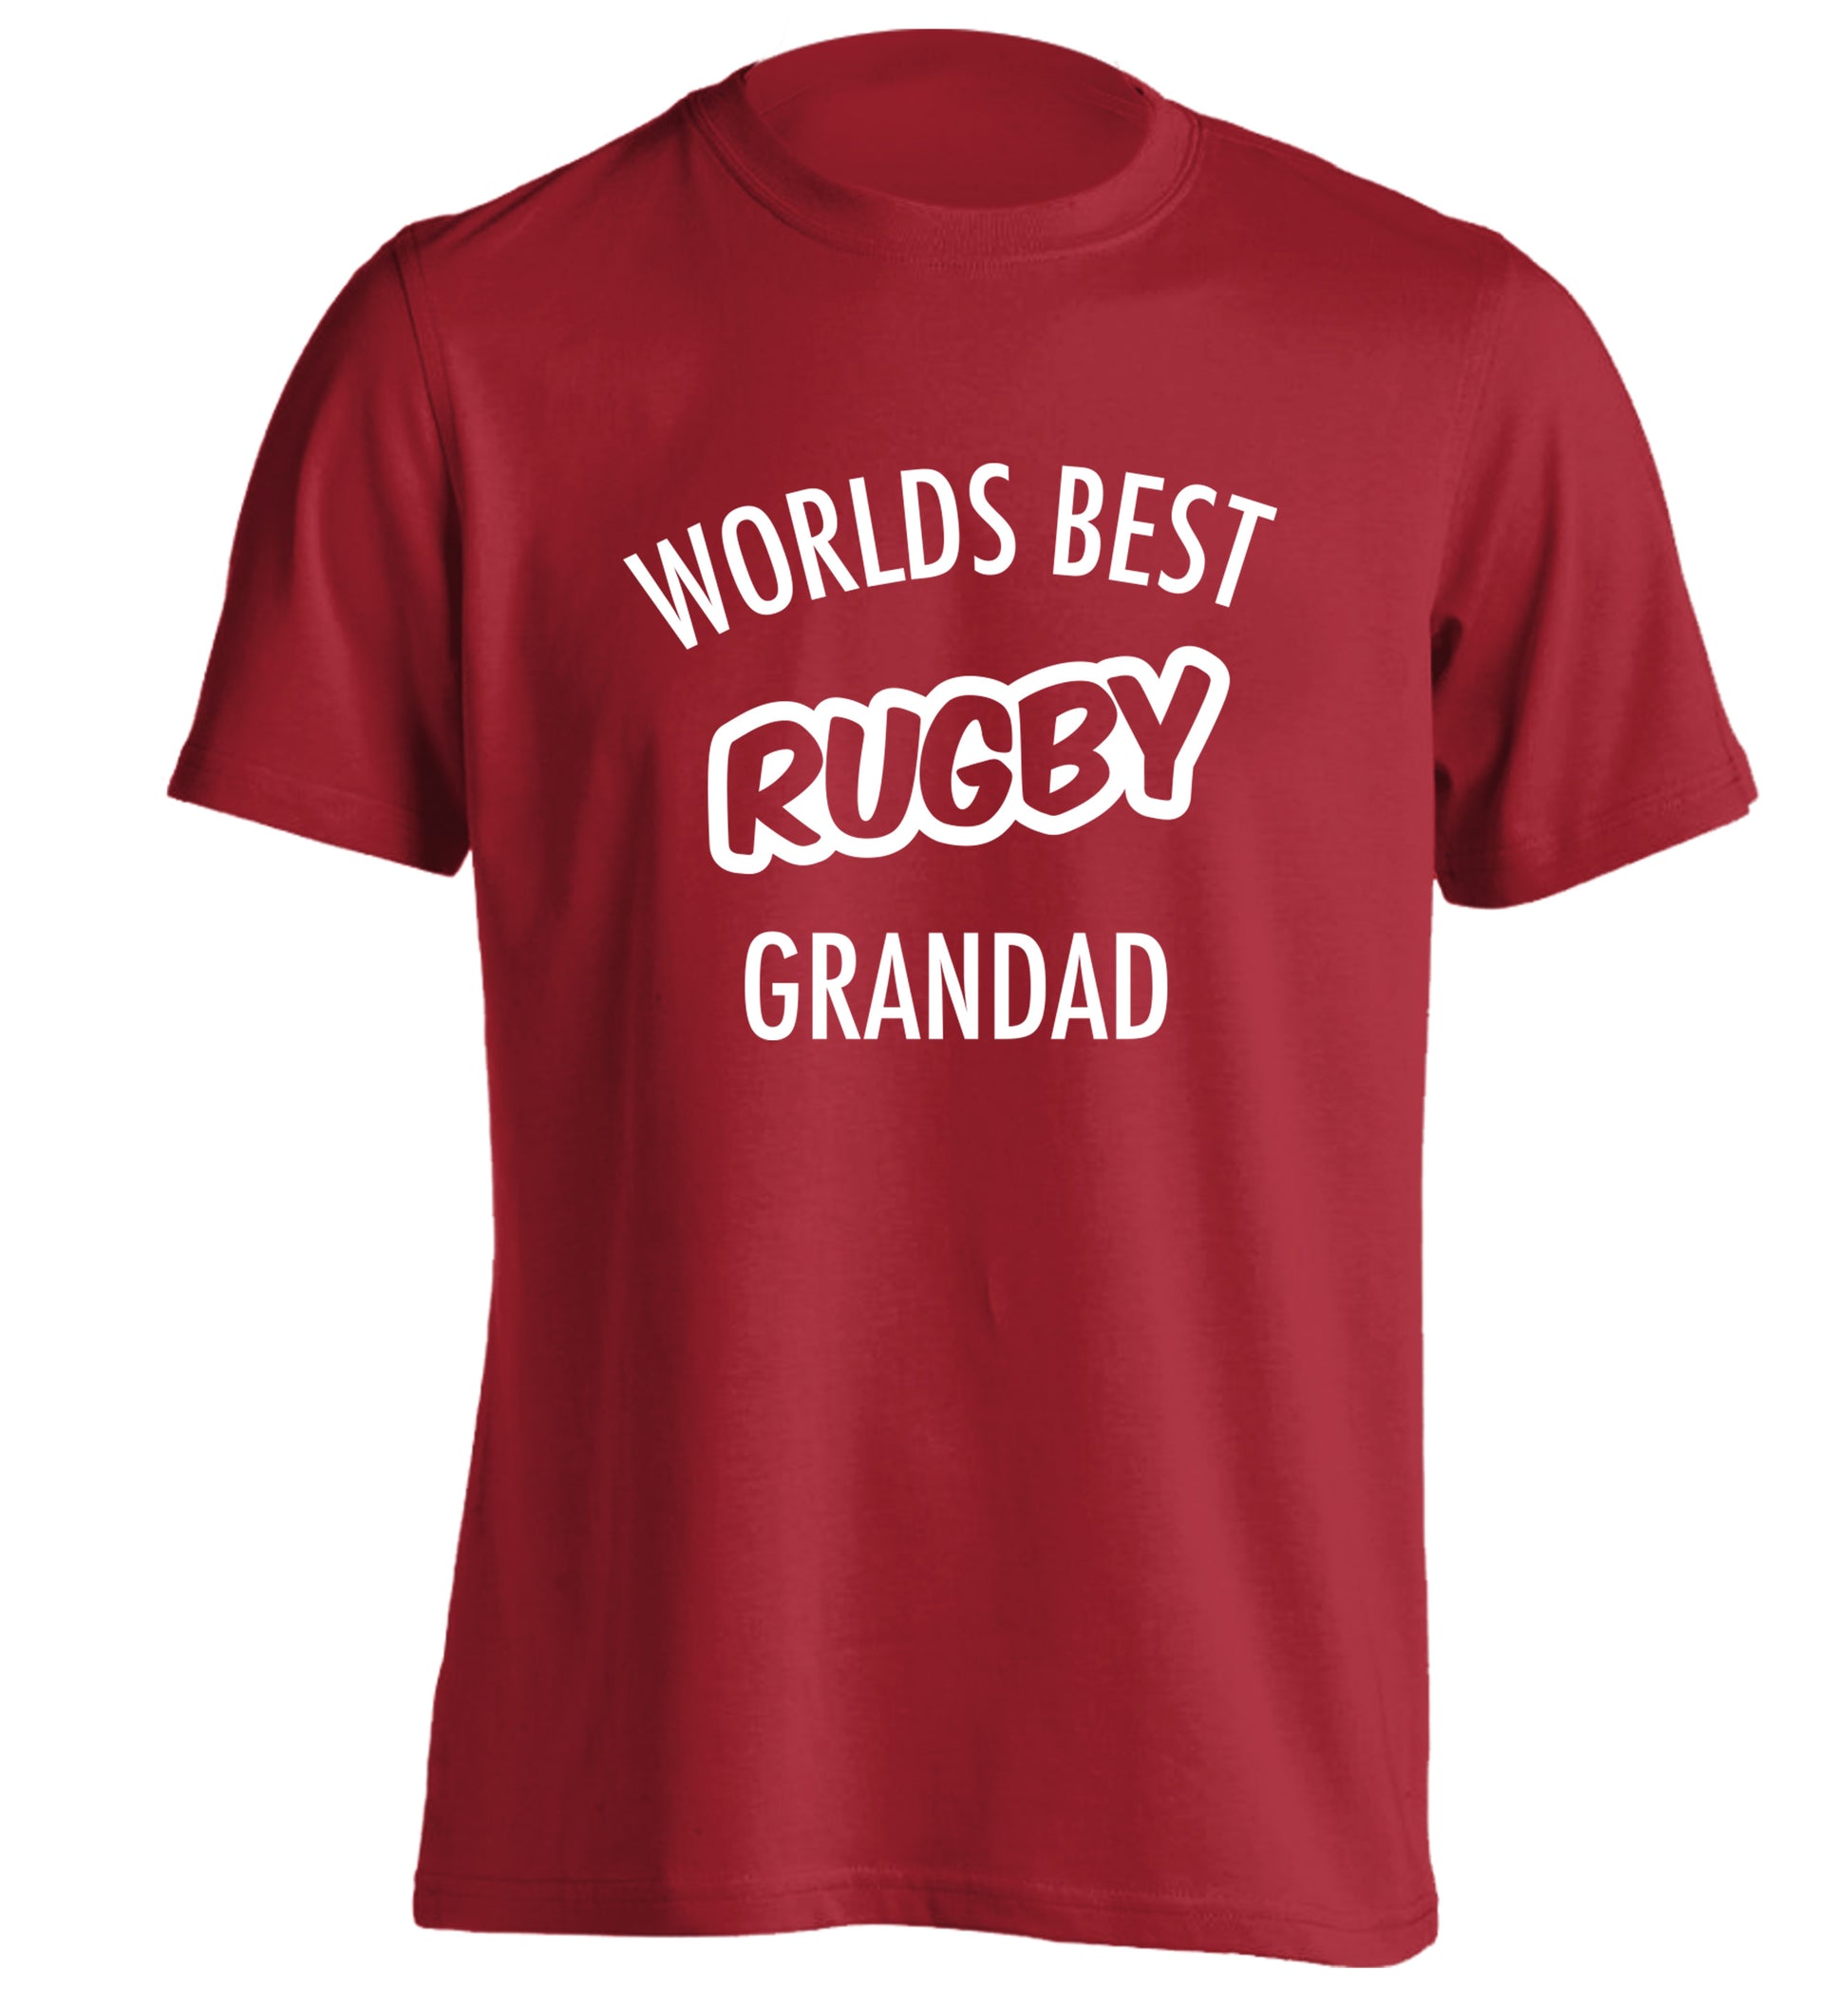 Worlds best rugby grandad adults unisex red Tshirt 2XL